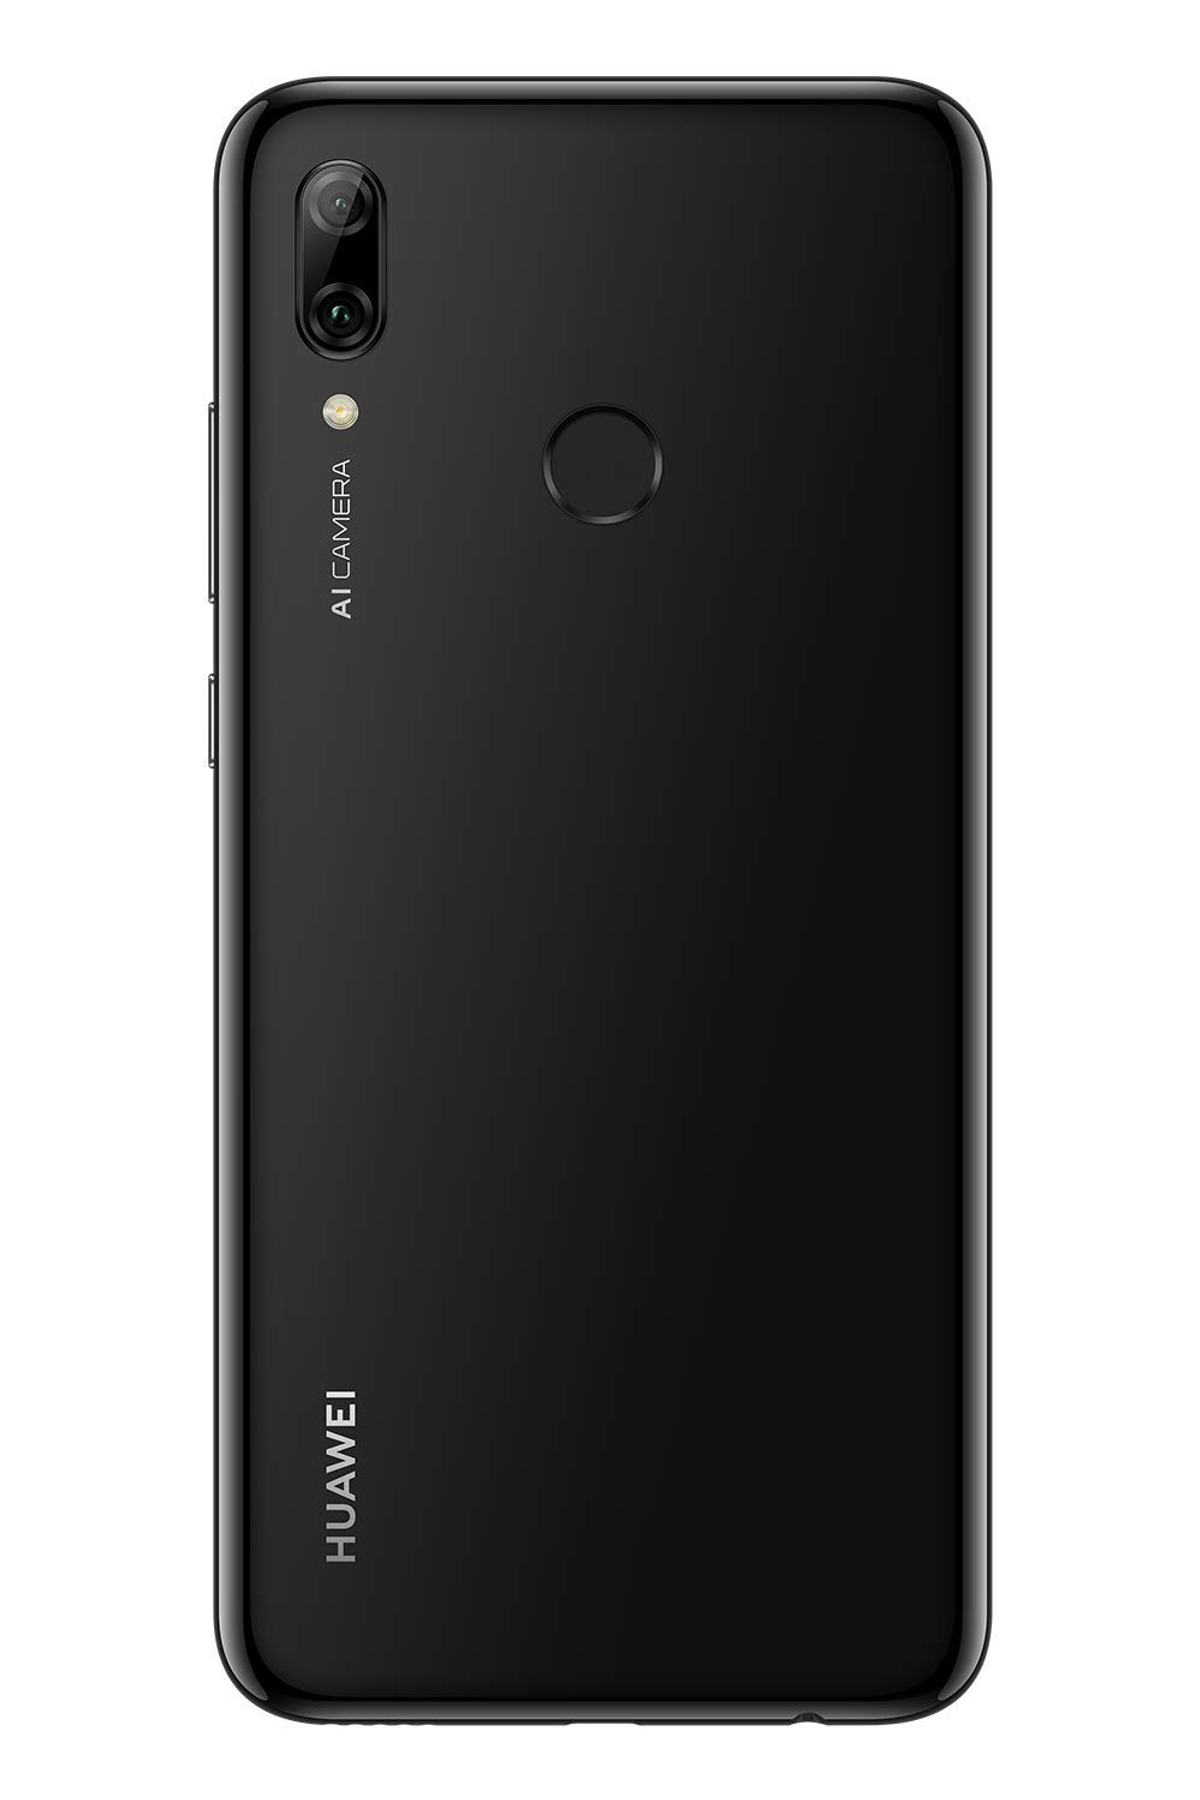 Midnight Black (2019) GB HUAWEI MIDNIGHT SMART Dual SIM BLACK 64 P